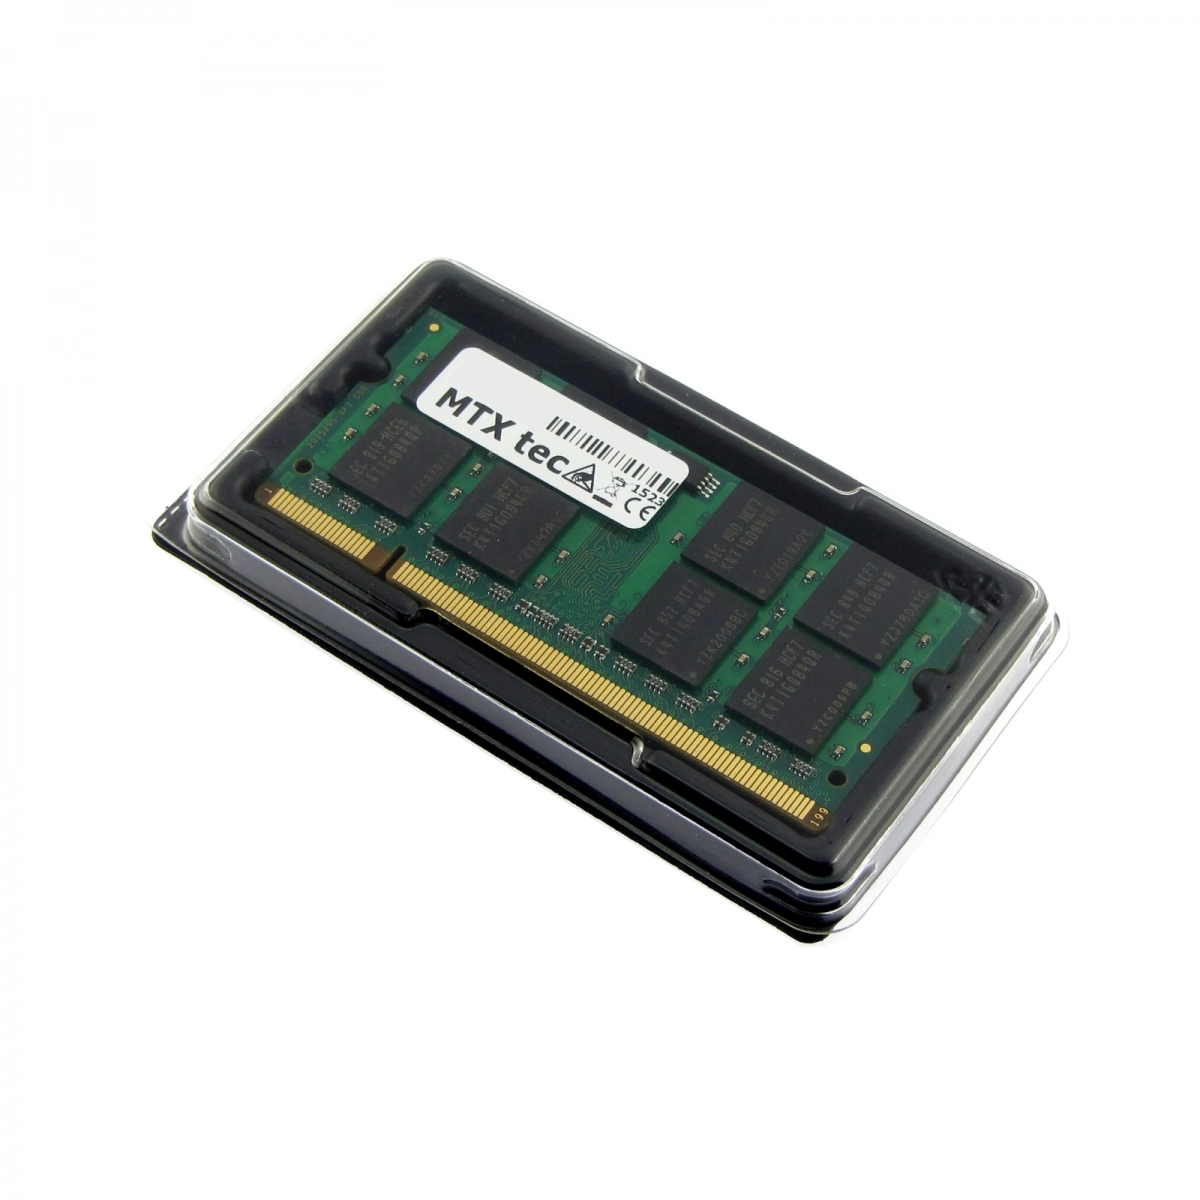 MTXtec Arbeitsspeicher 2 GB RAM für FUJITSU LifeBook E-8310, E8310